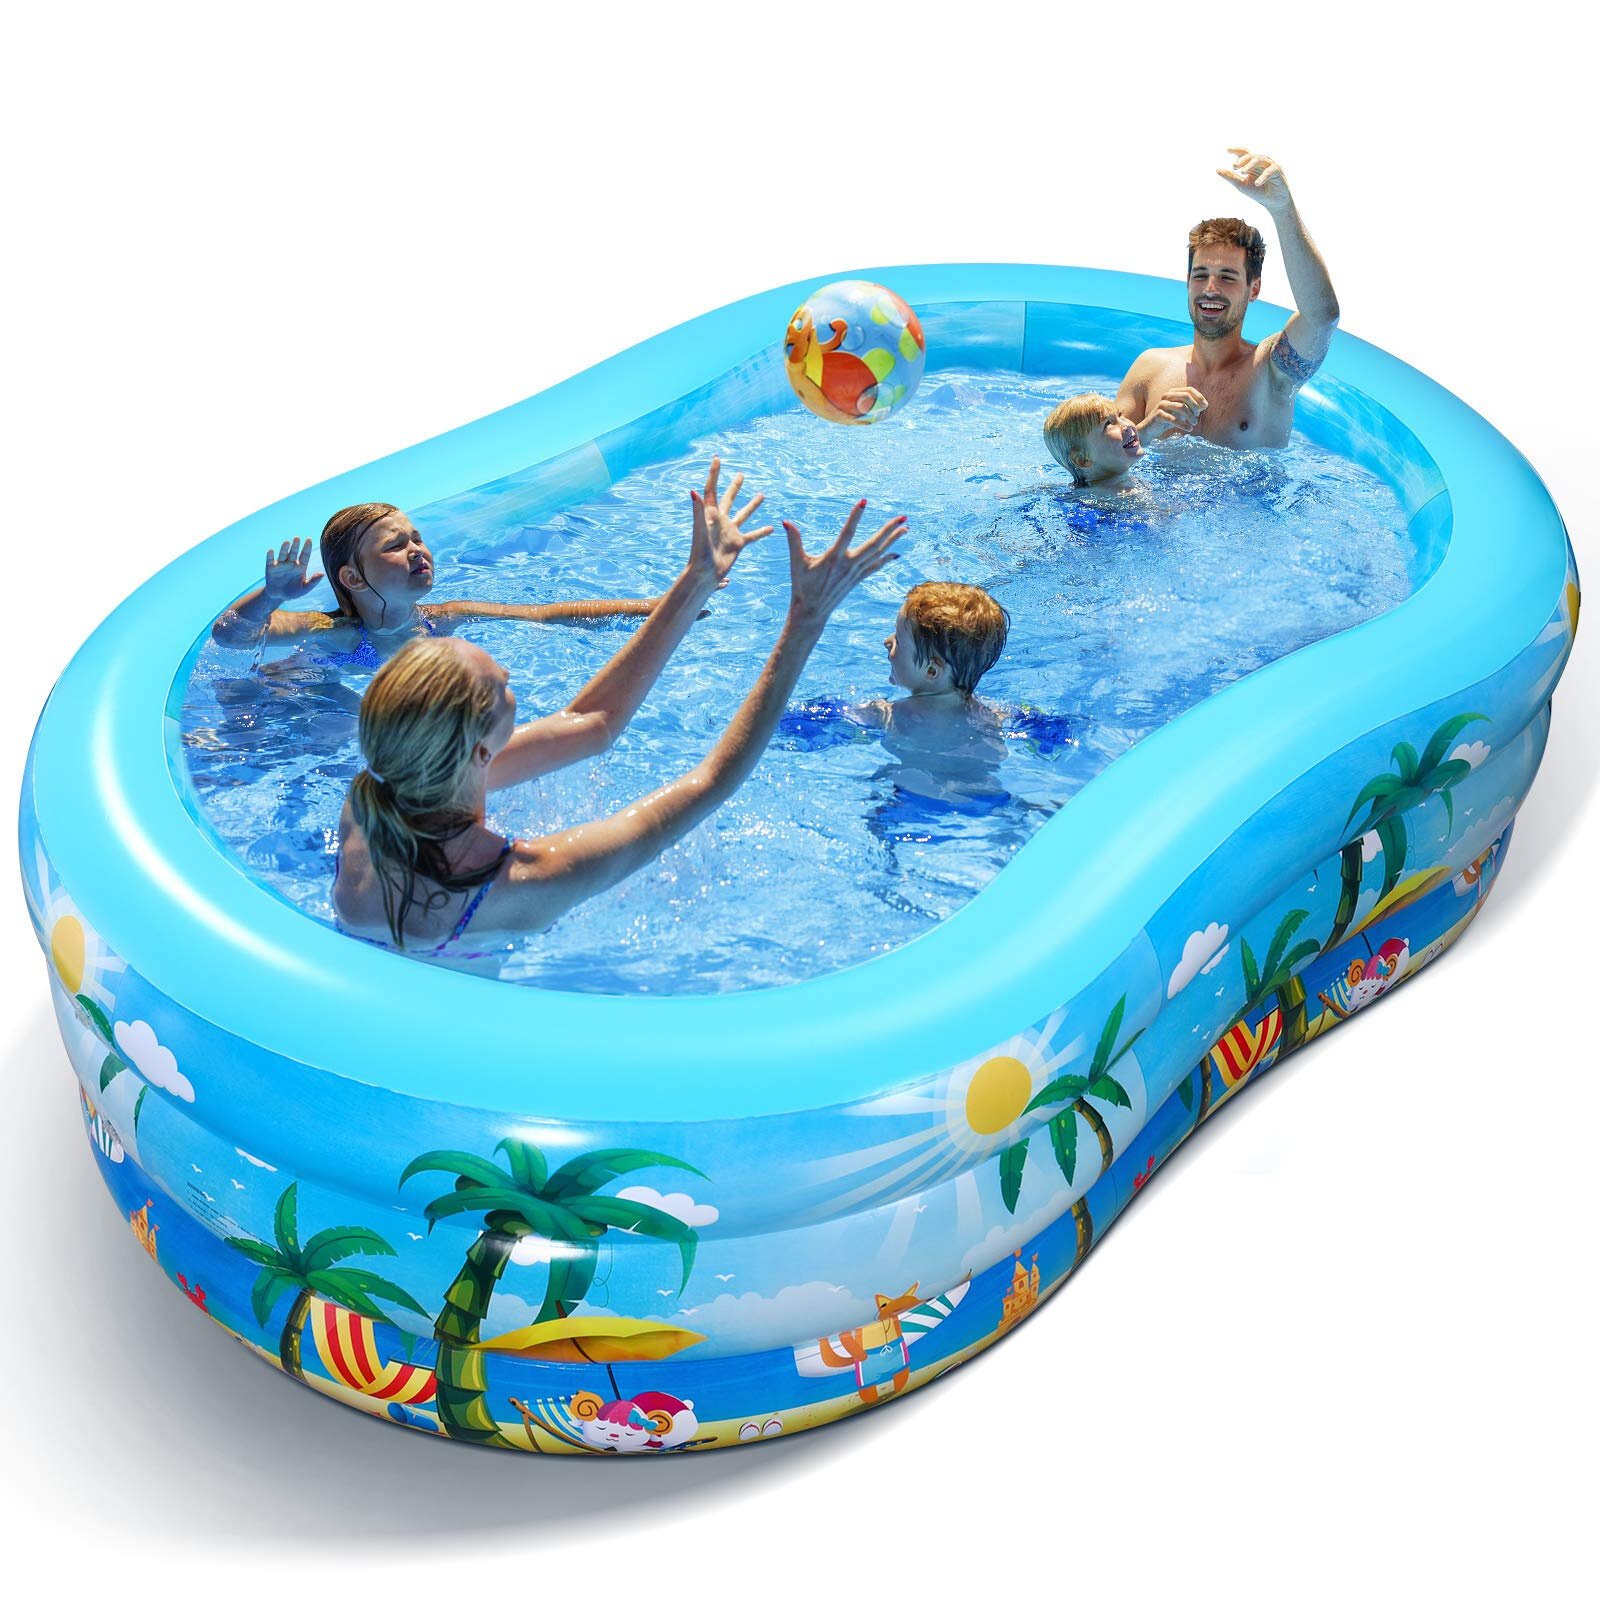 Swim Centre Family Pool Childrens Inflatable Swimming Paddling Garden Pool 